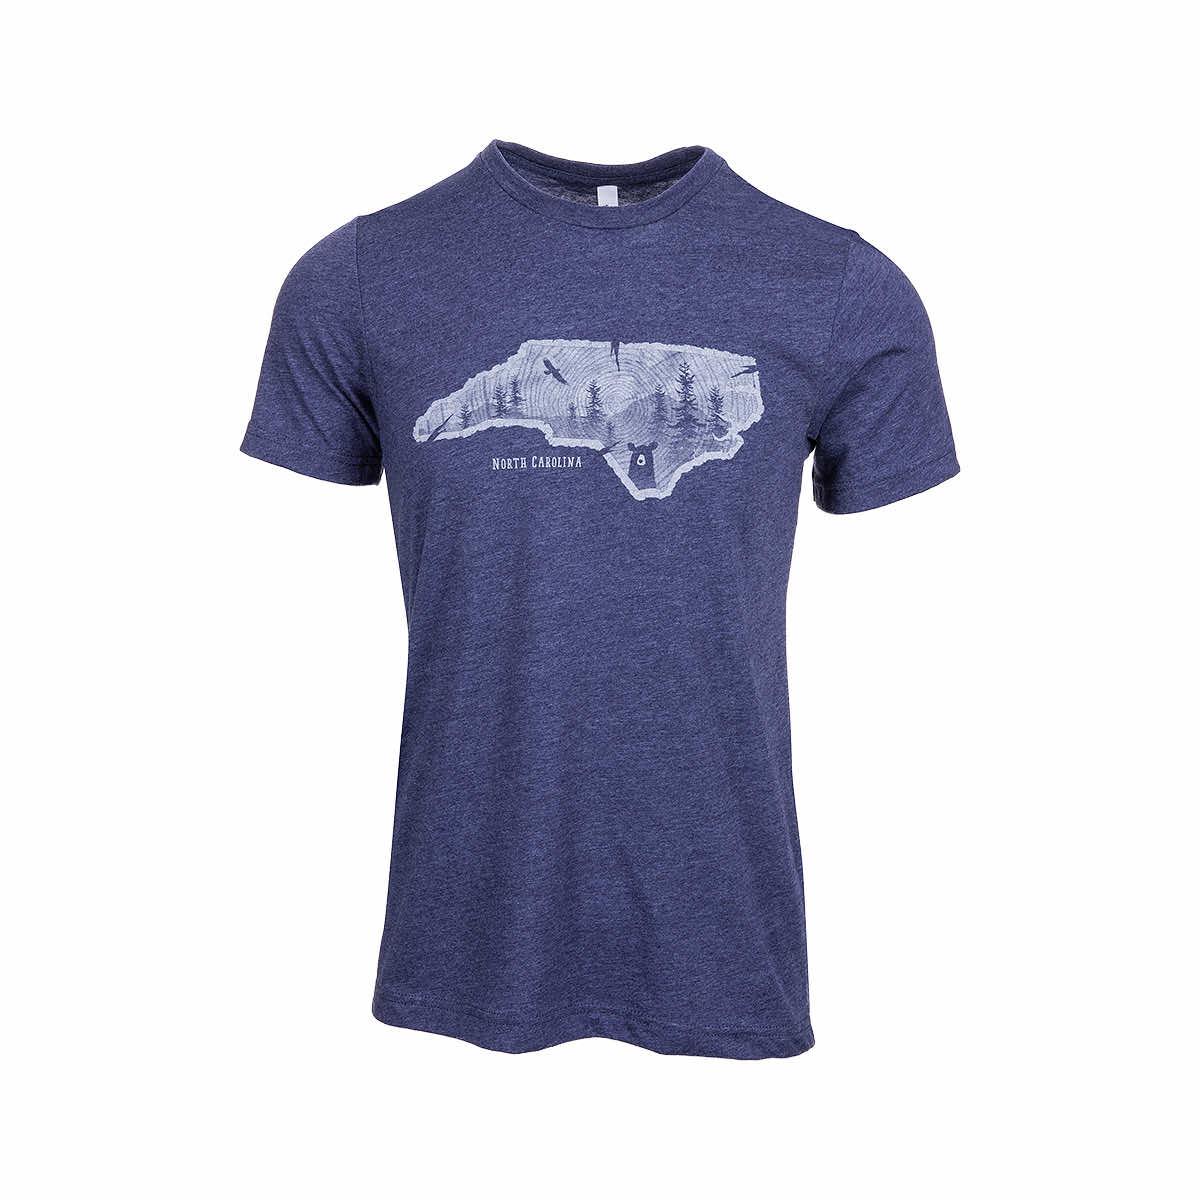  North Carolina Woodcut Short Sleeve T- Shirt